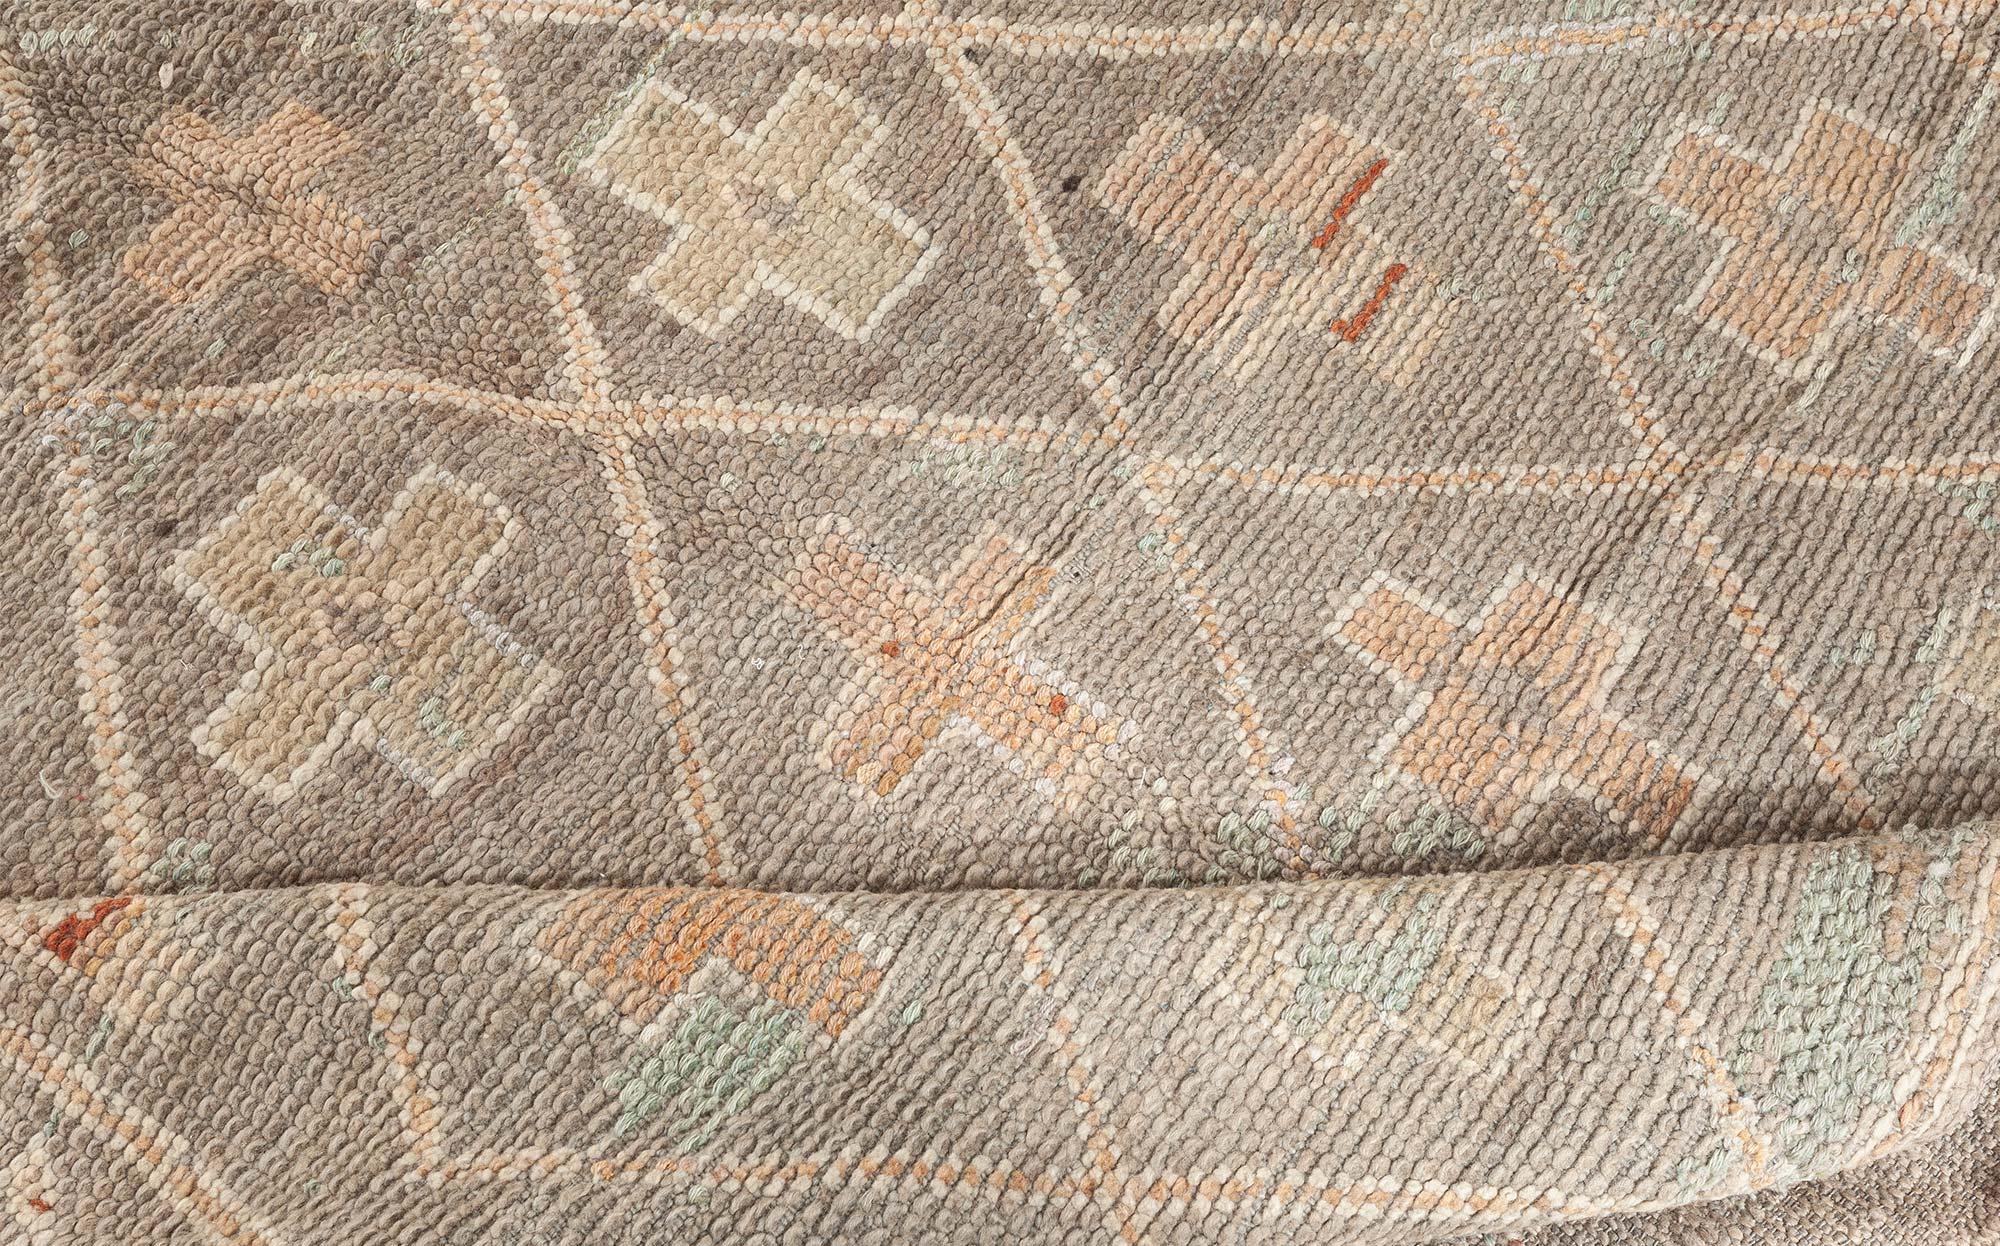 Vintage Tribal Moroccan Green Handmade Wool Rug
Size: 5'9